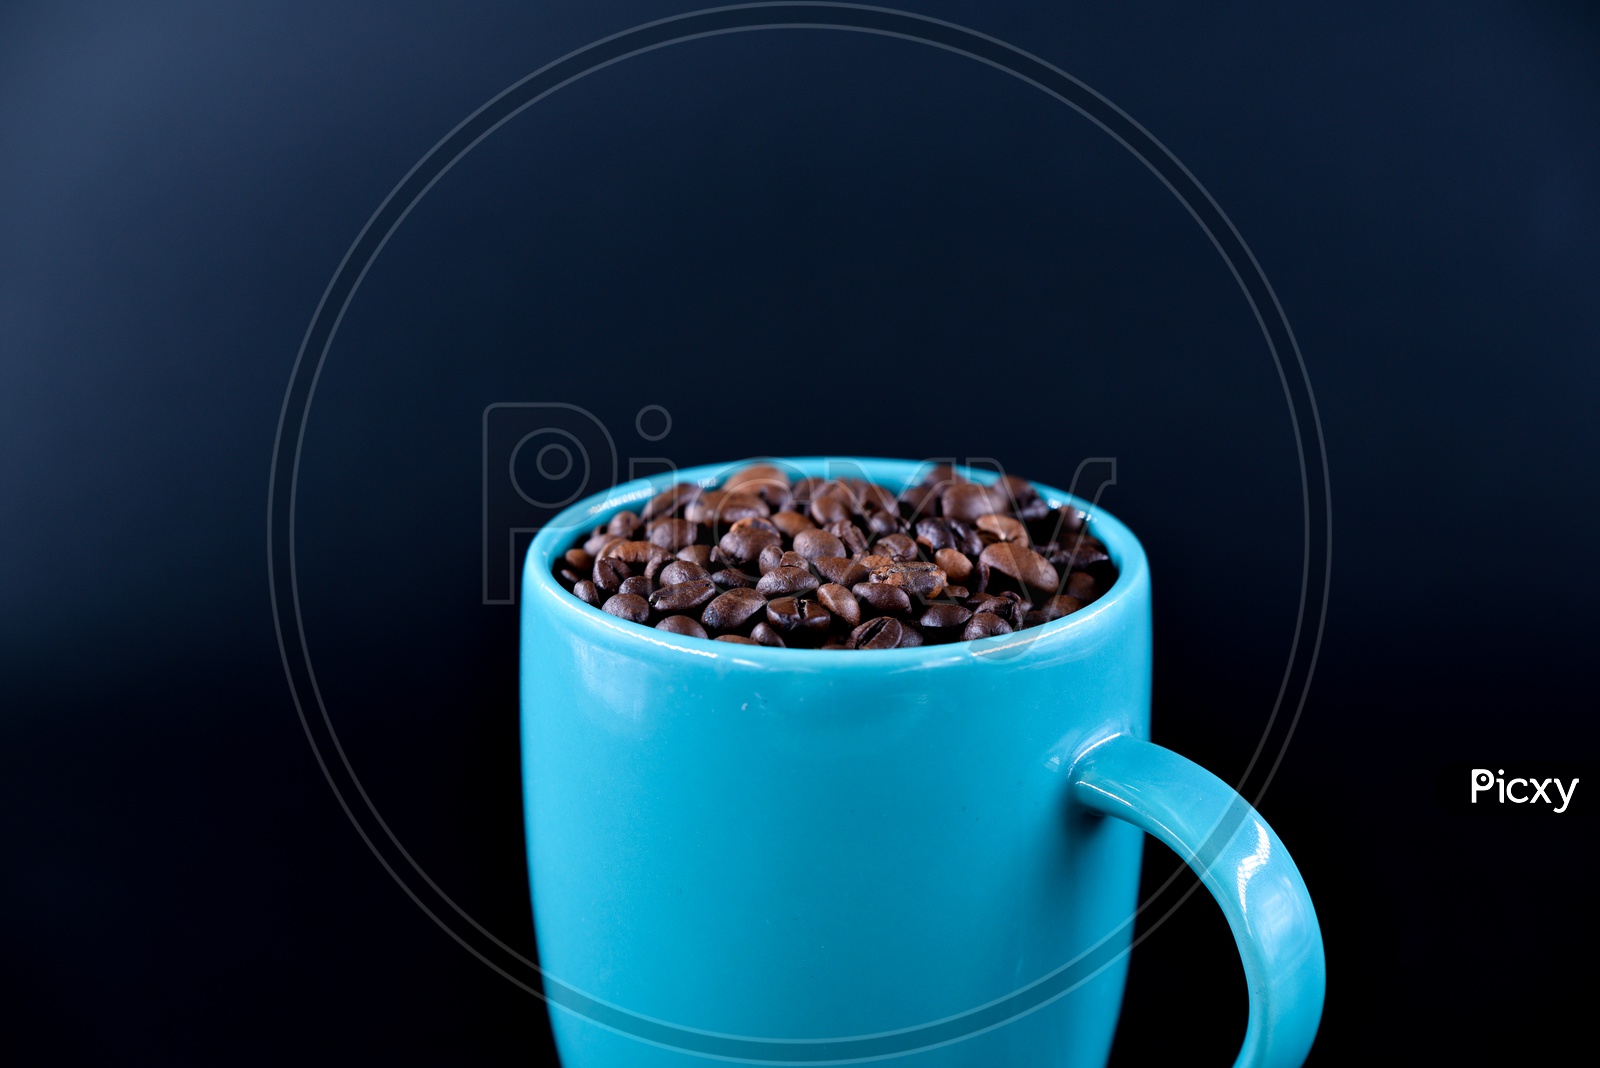 Coffee beans in a blue coffee mug on a dark background